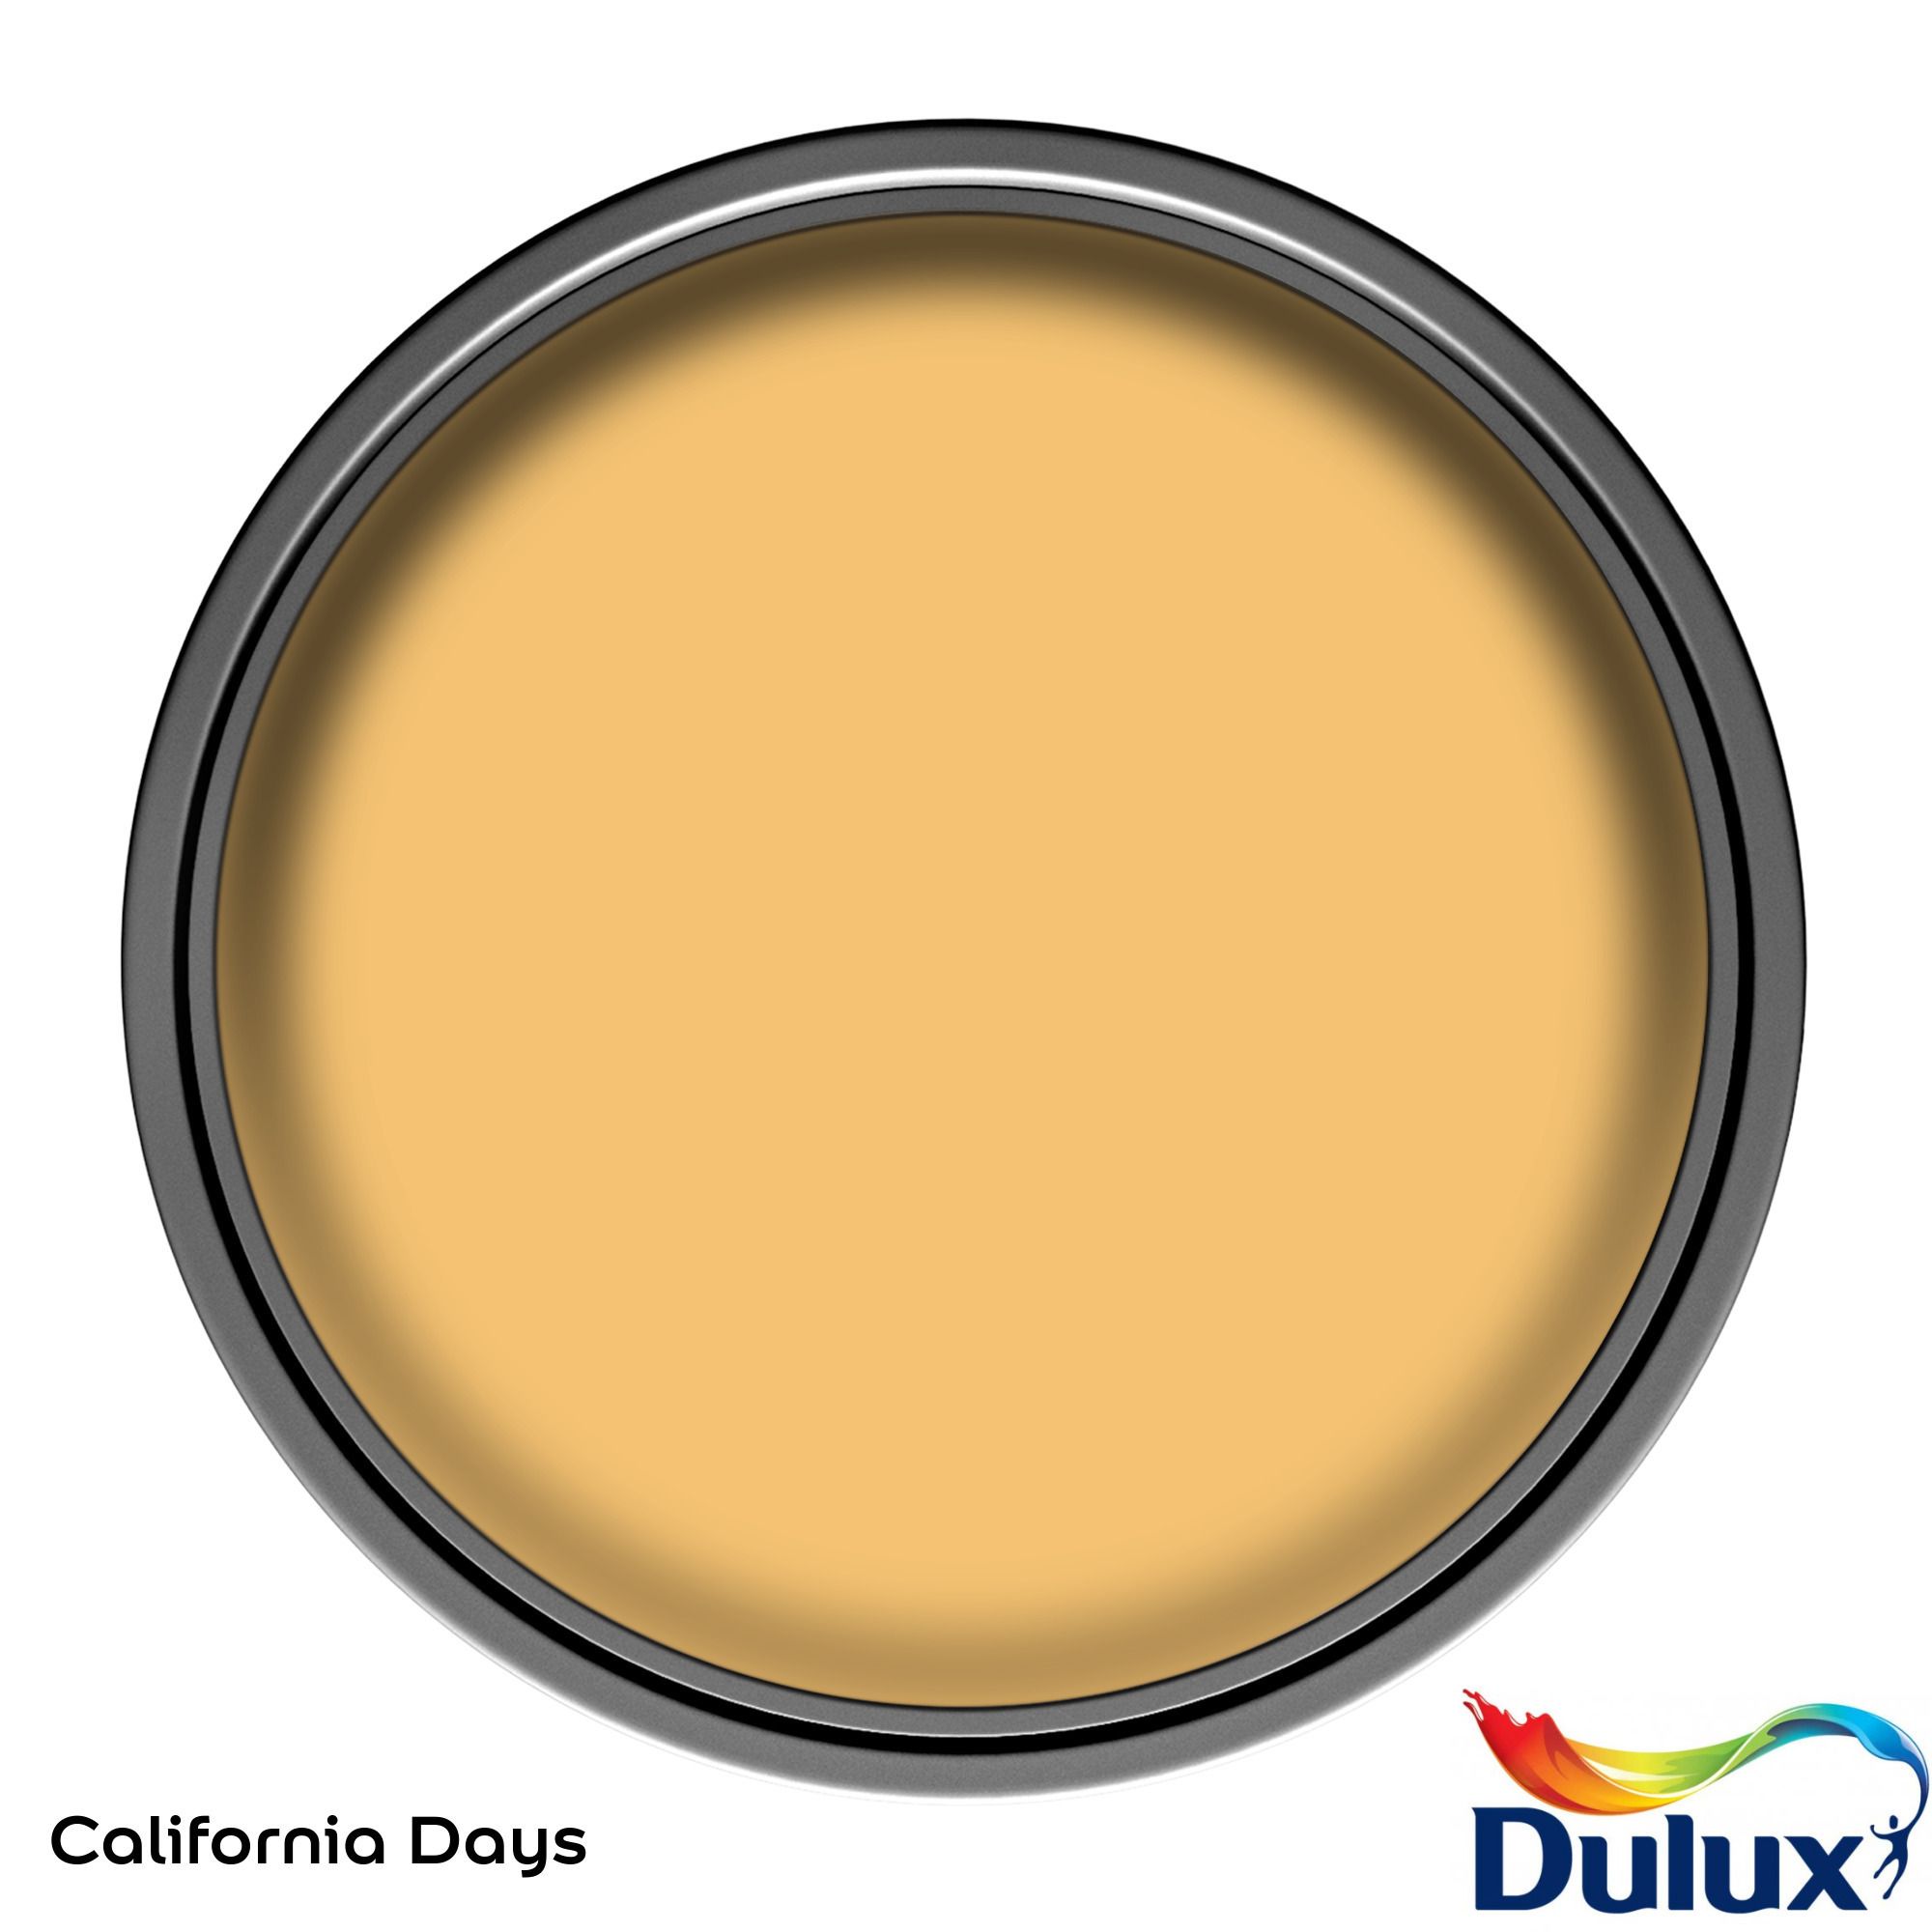 Dulux Easycare California Days Matt Wall paint, 2.5L